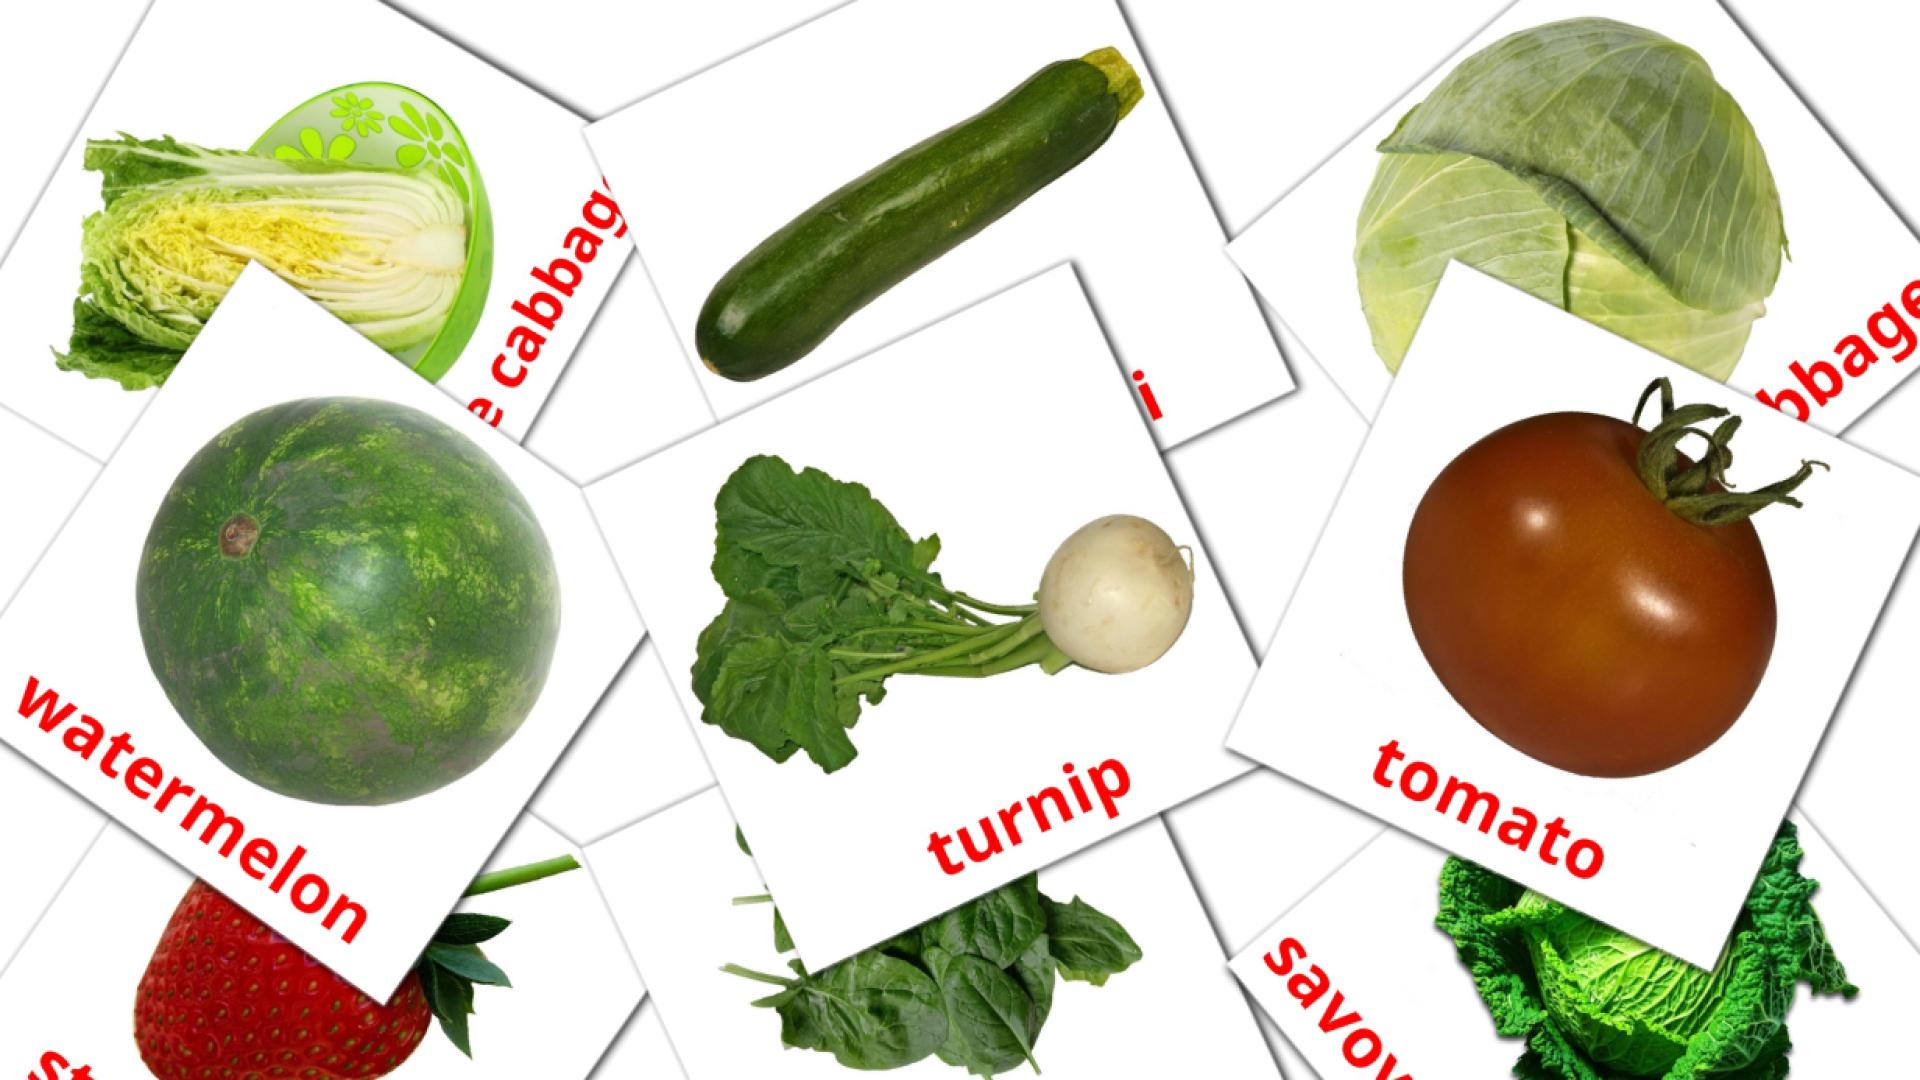 Food somali vocabulary flashcards